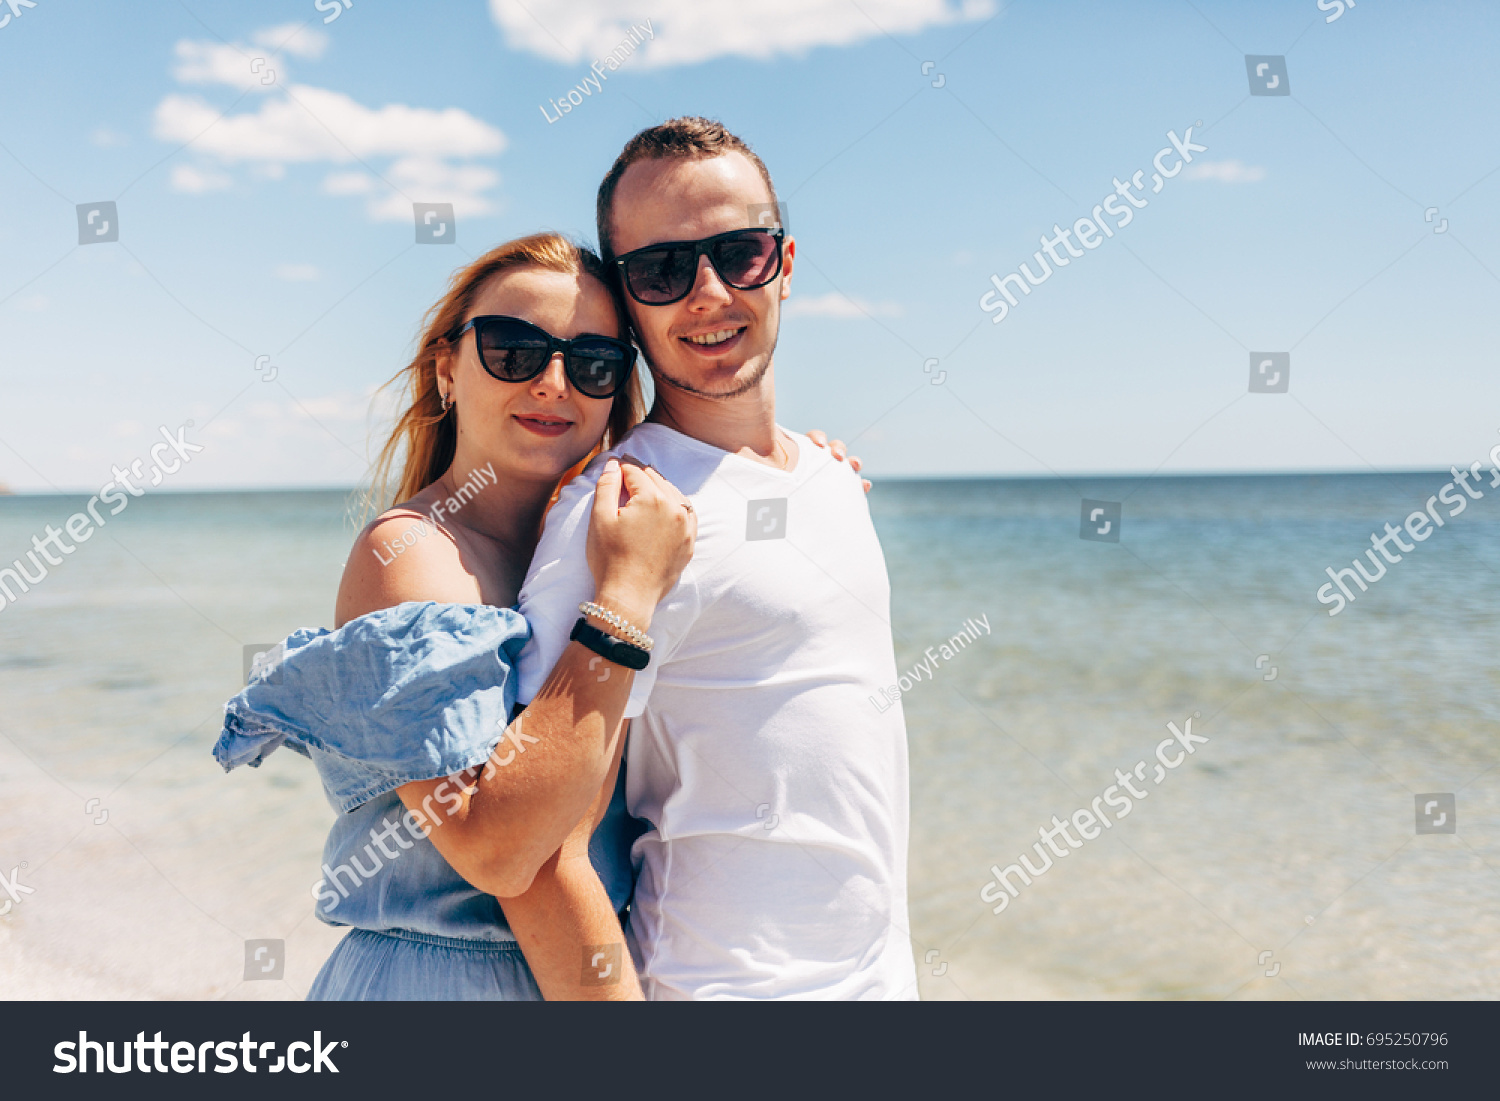 Young traveling couple walking along sandy beach near the sea #695250796